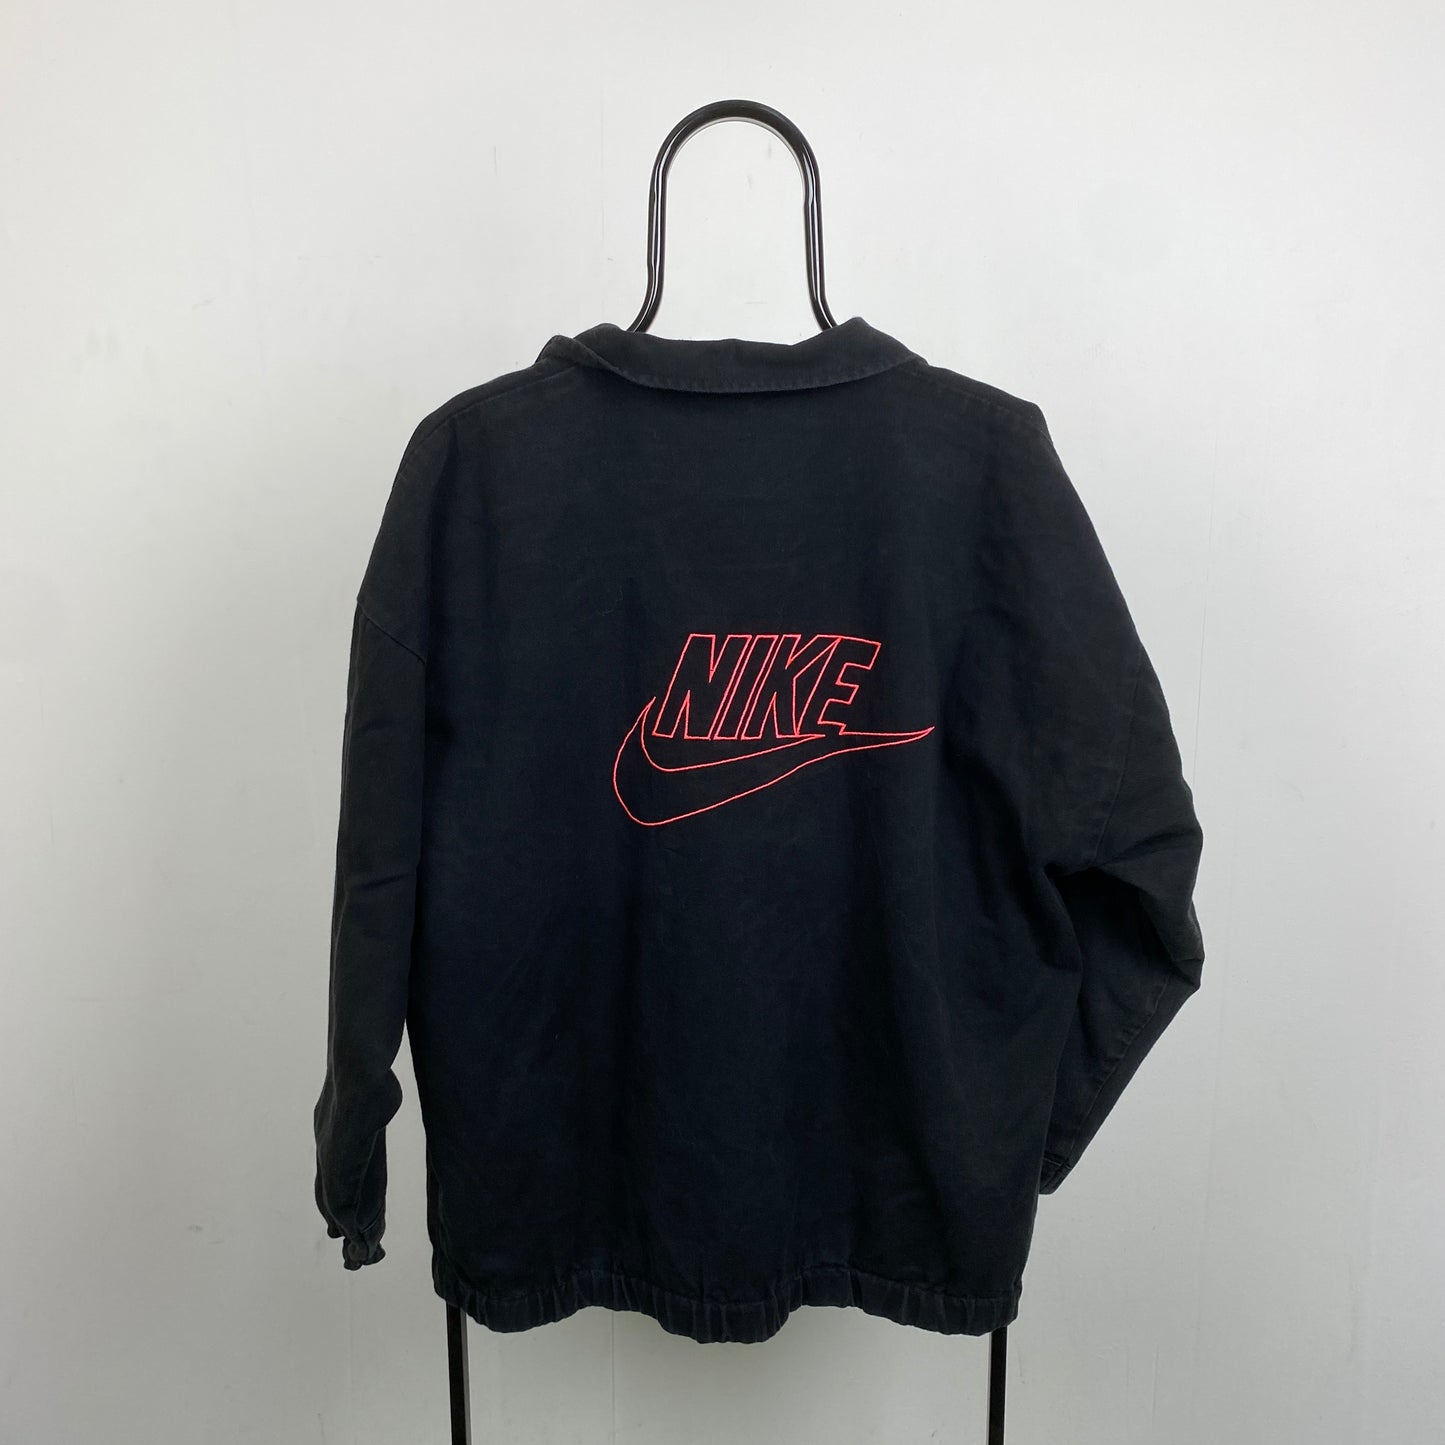 90s Nike Drill Top Sweatshirt Black Large